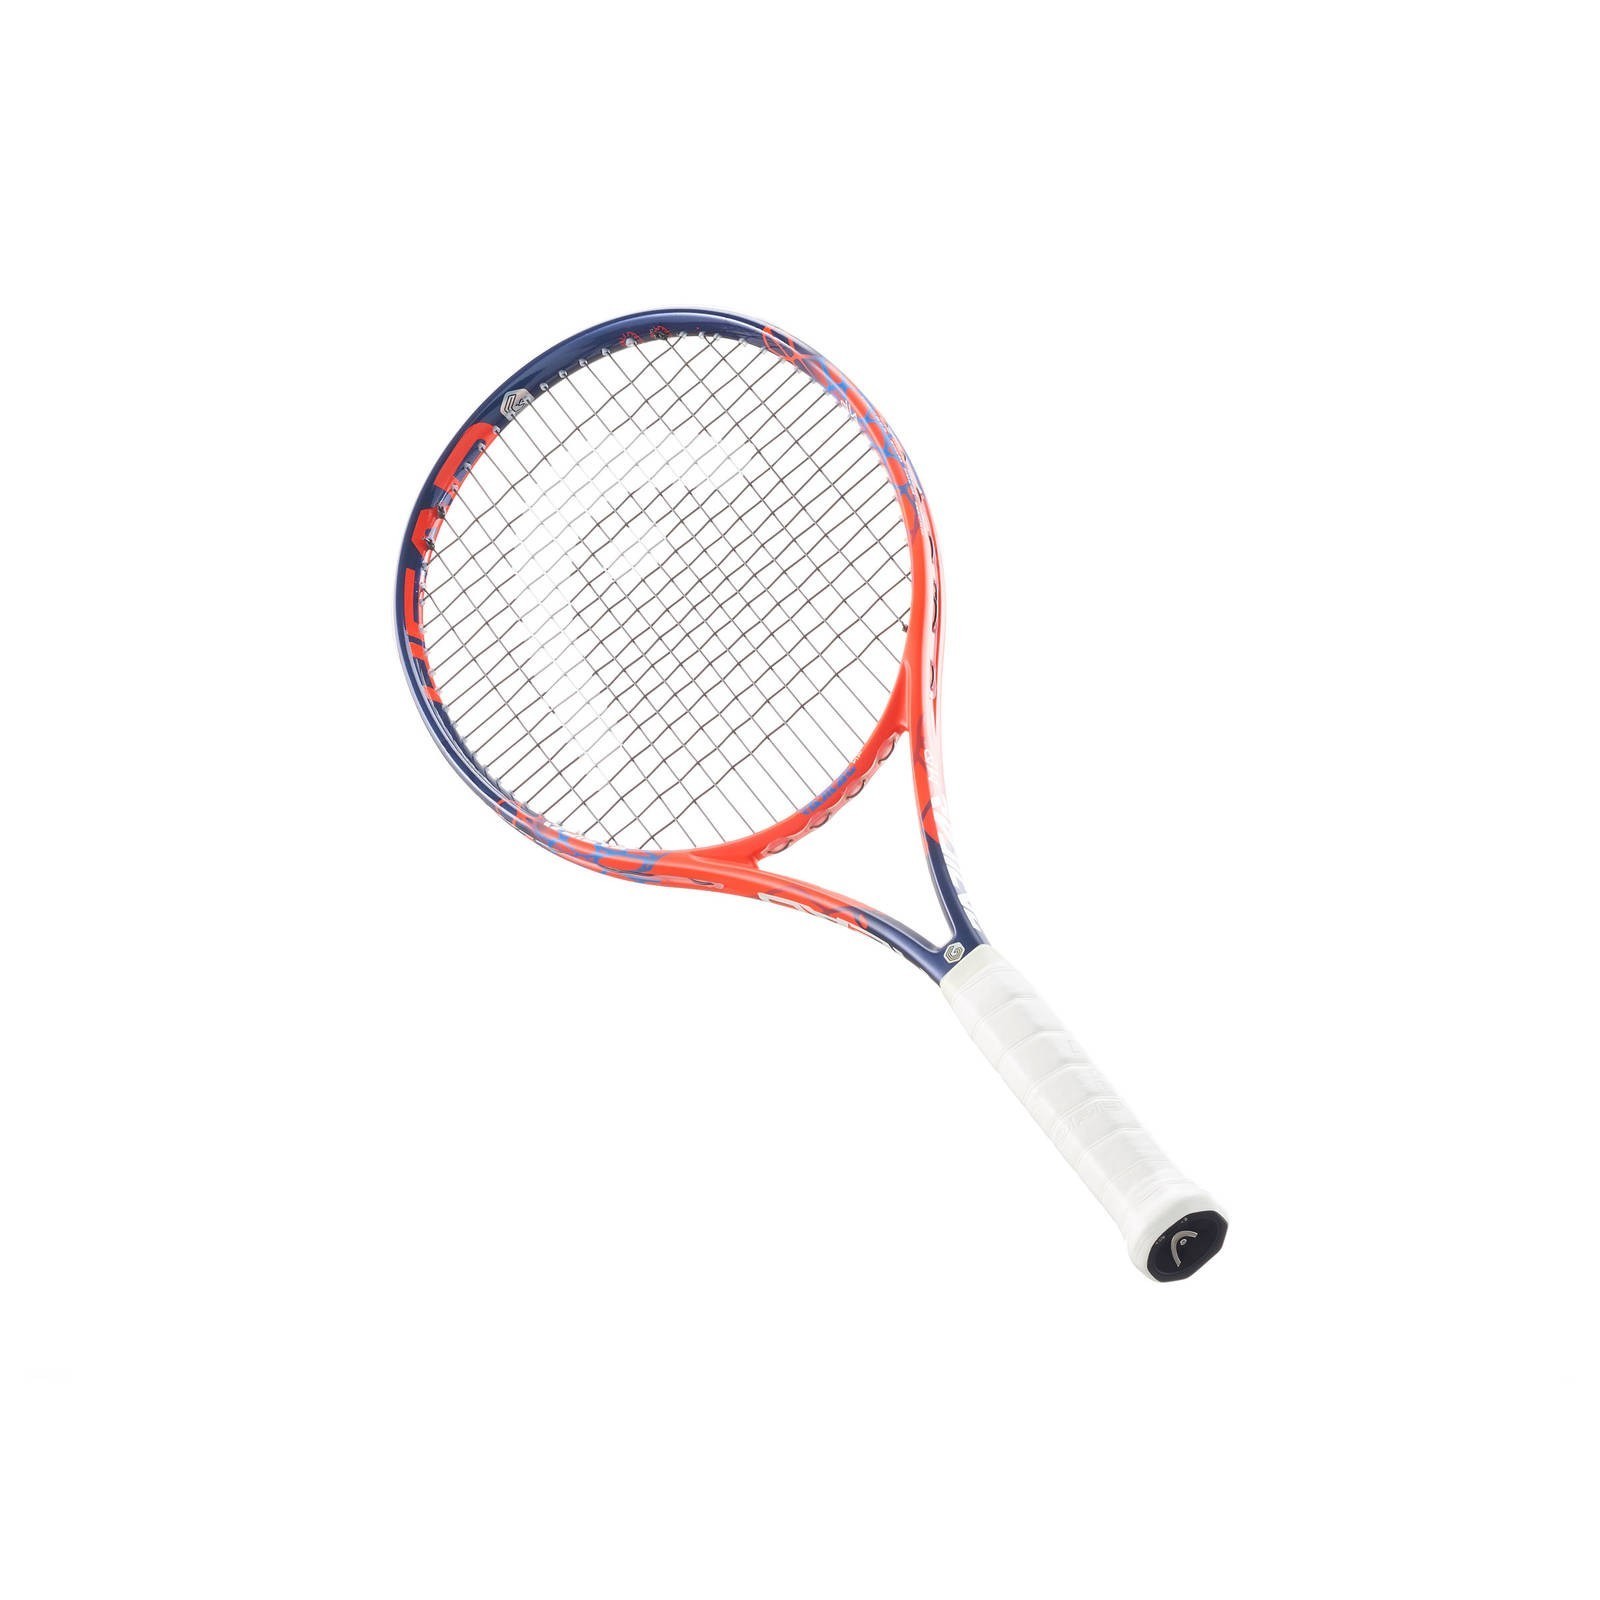 Ракетка для большого тенниса Head Graphene Touch Radical MP 2018